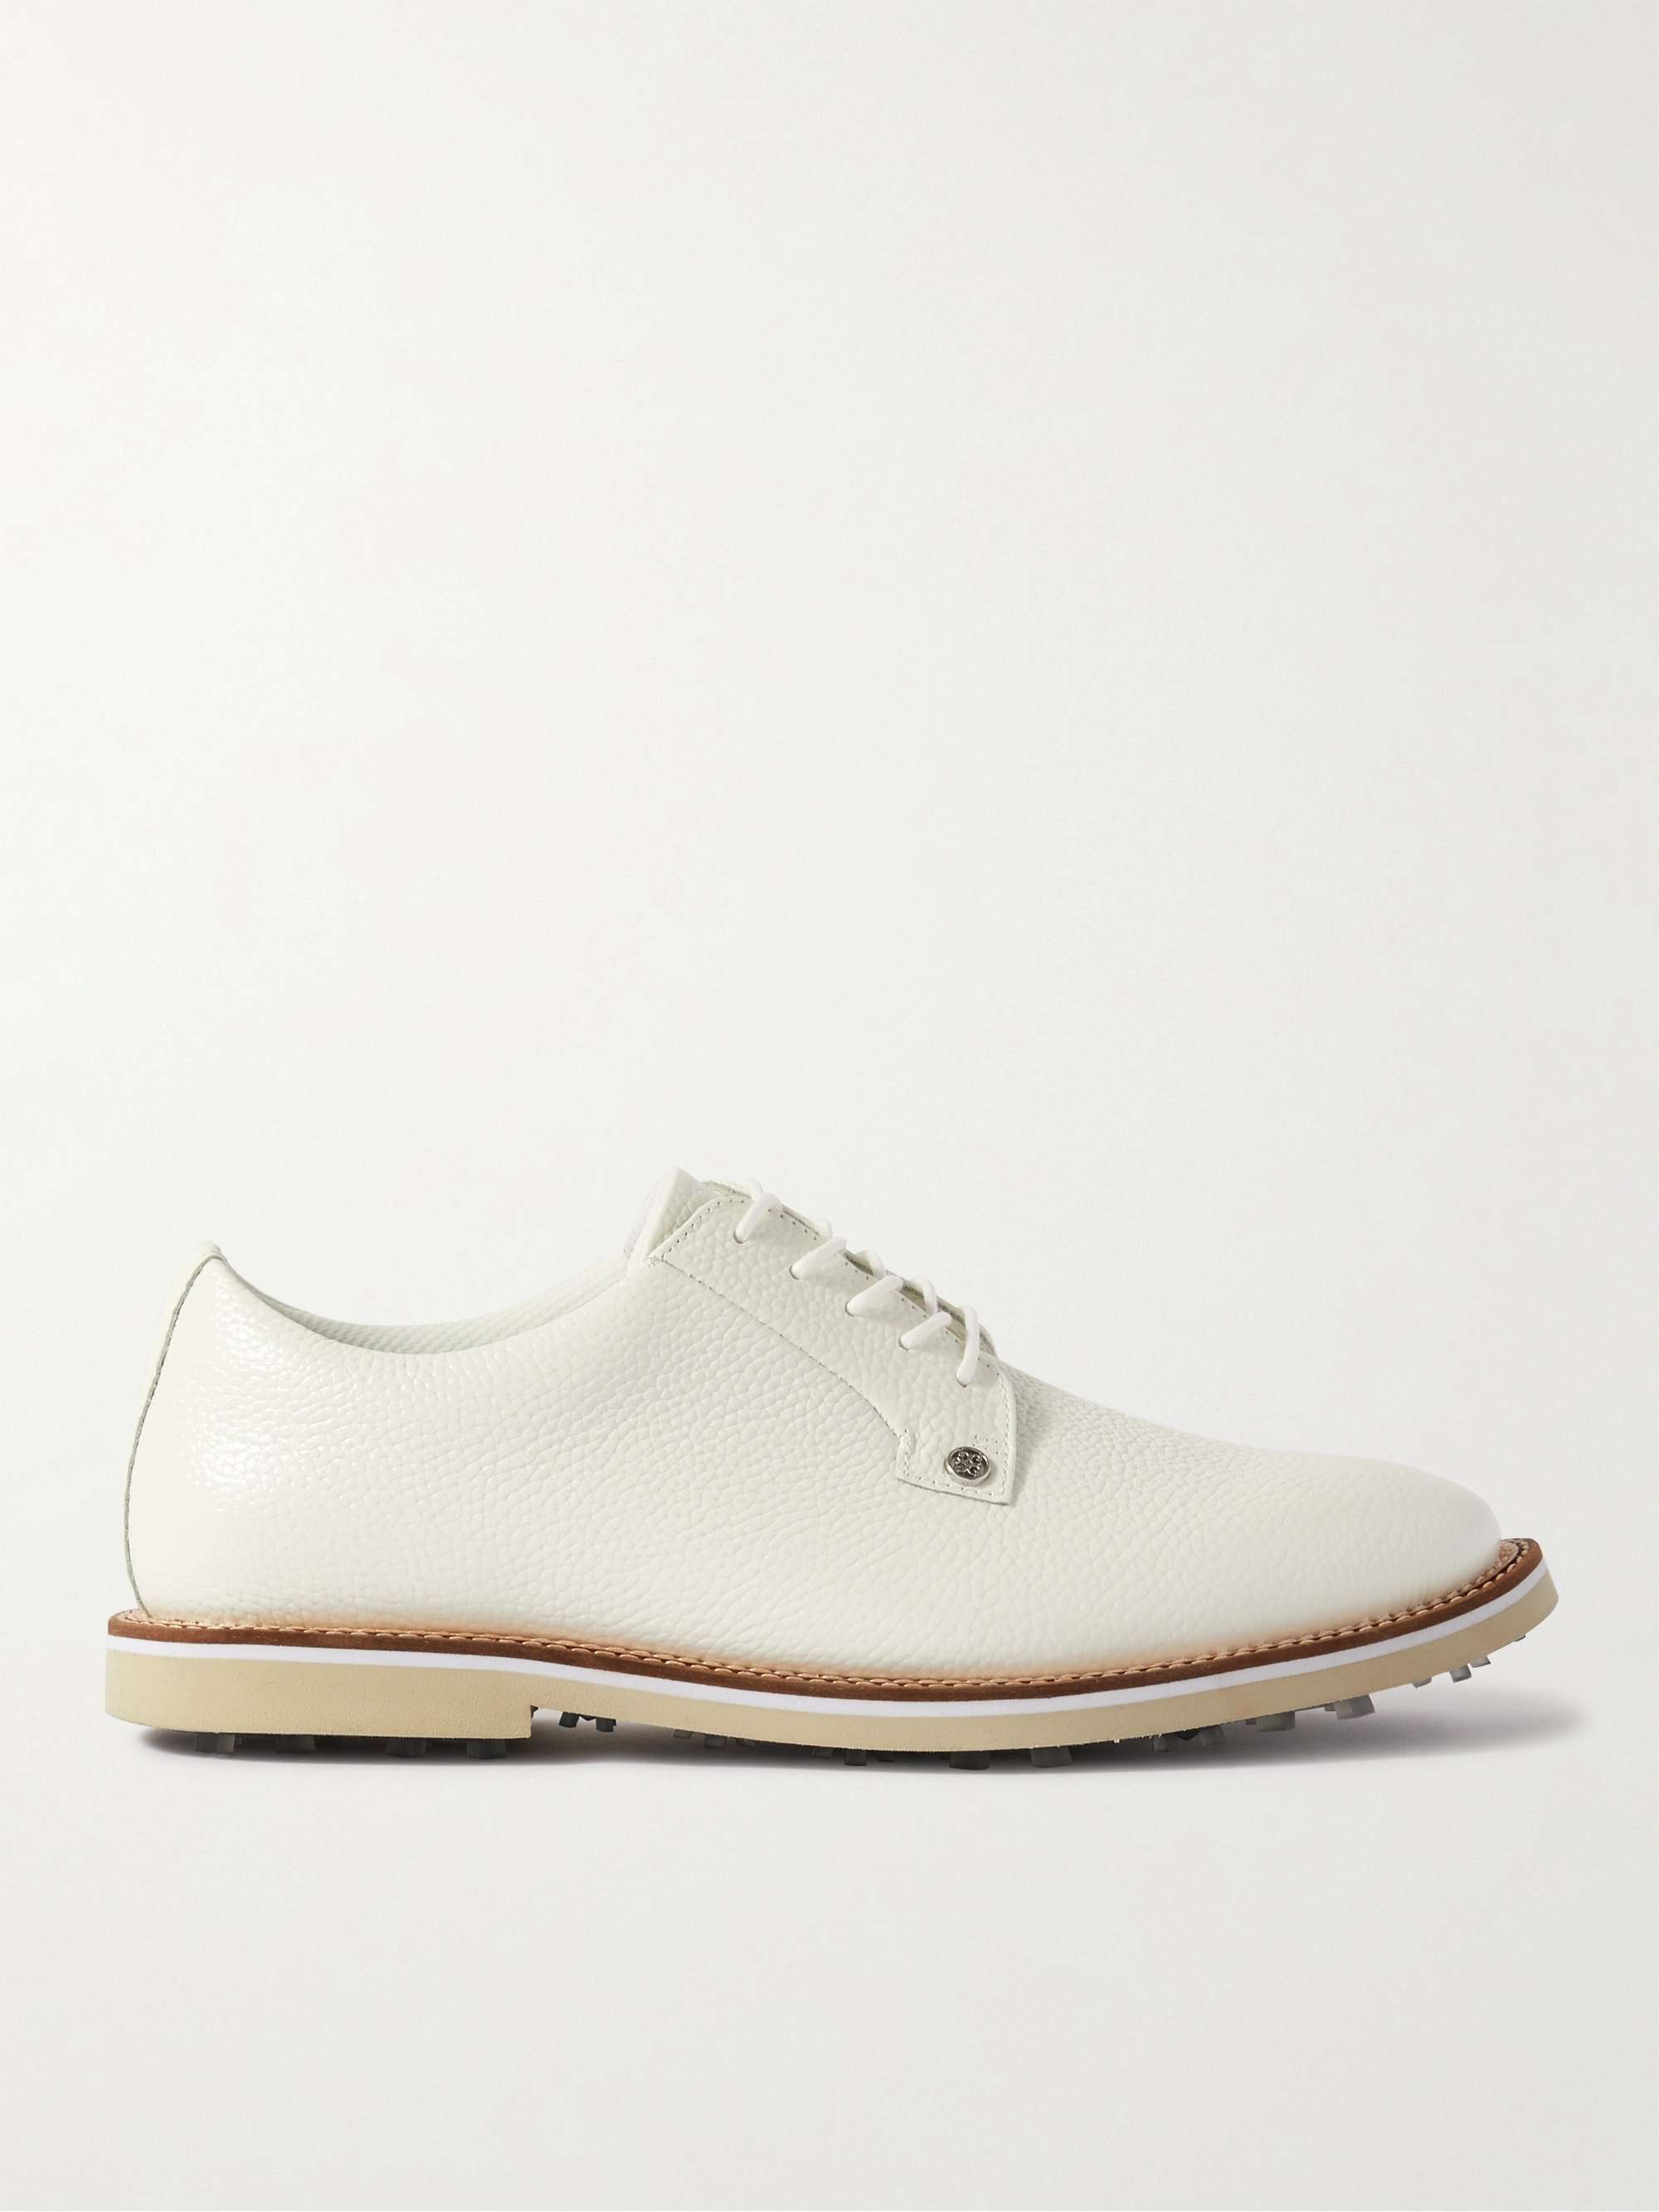 G/FORE Gallivanter Pebble-Grain Leather Golf Shoes